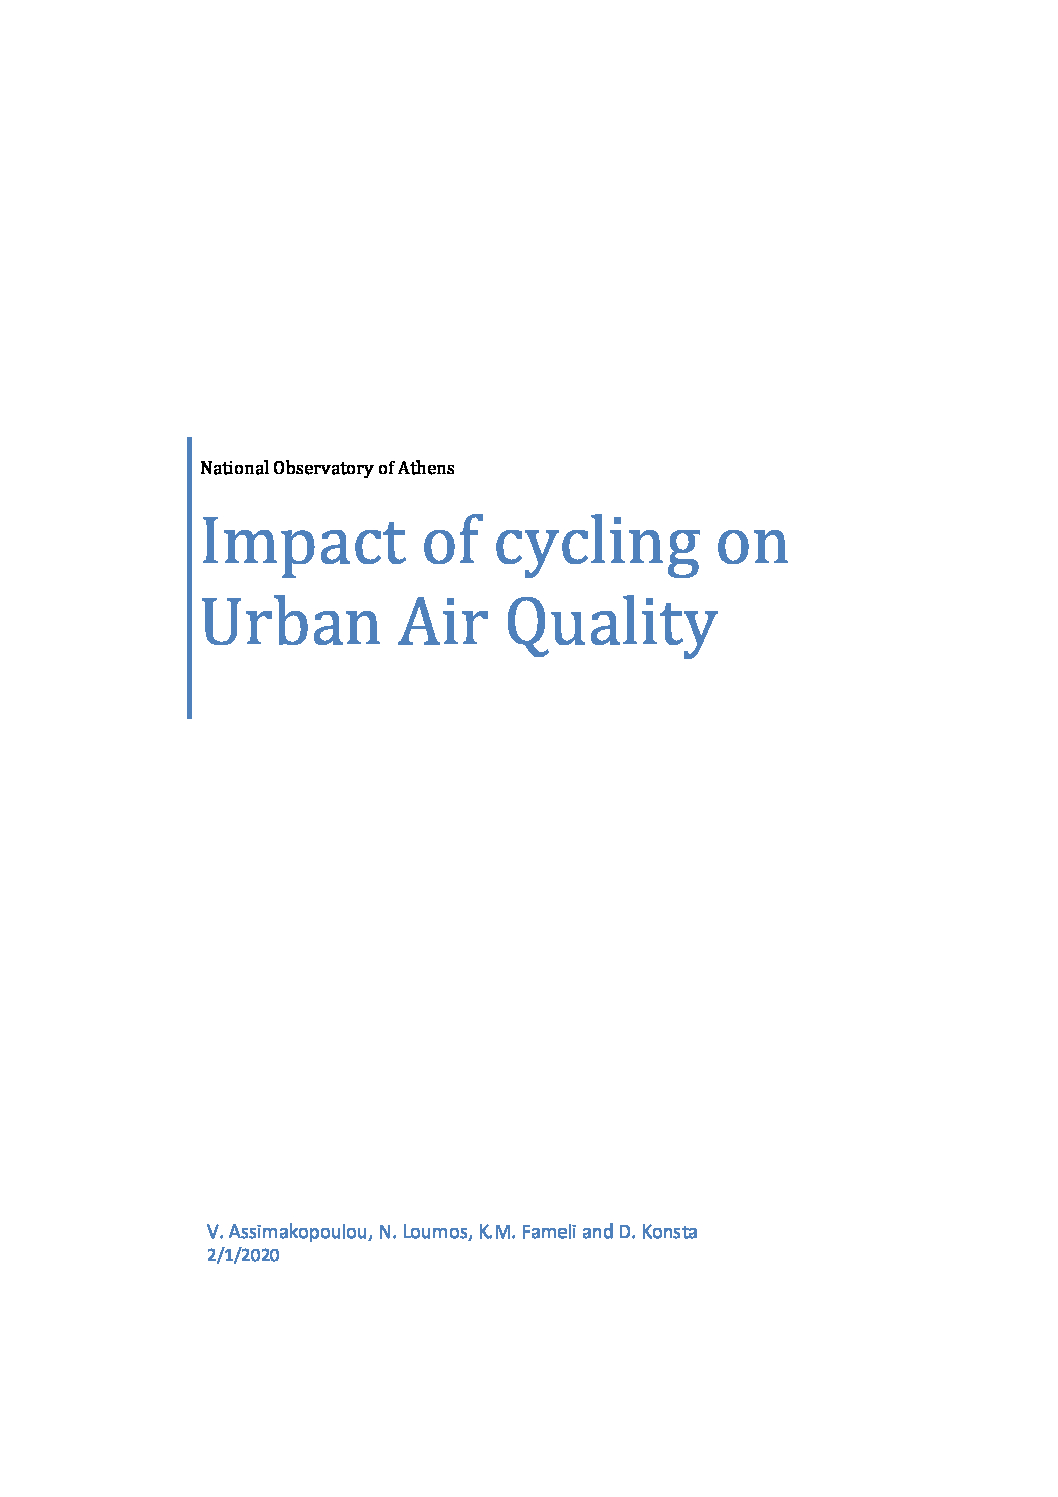 CyclUrban-Impact-of-cycling-on-urban-air-quality_Full-Report-NOA